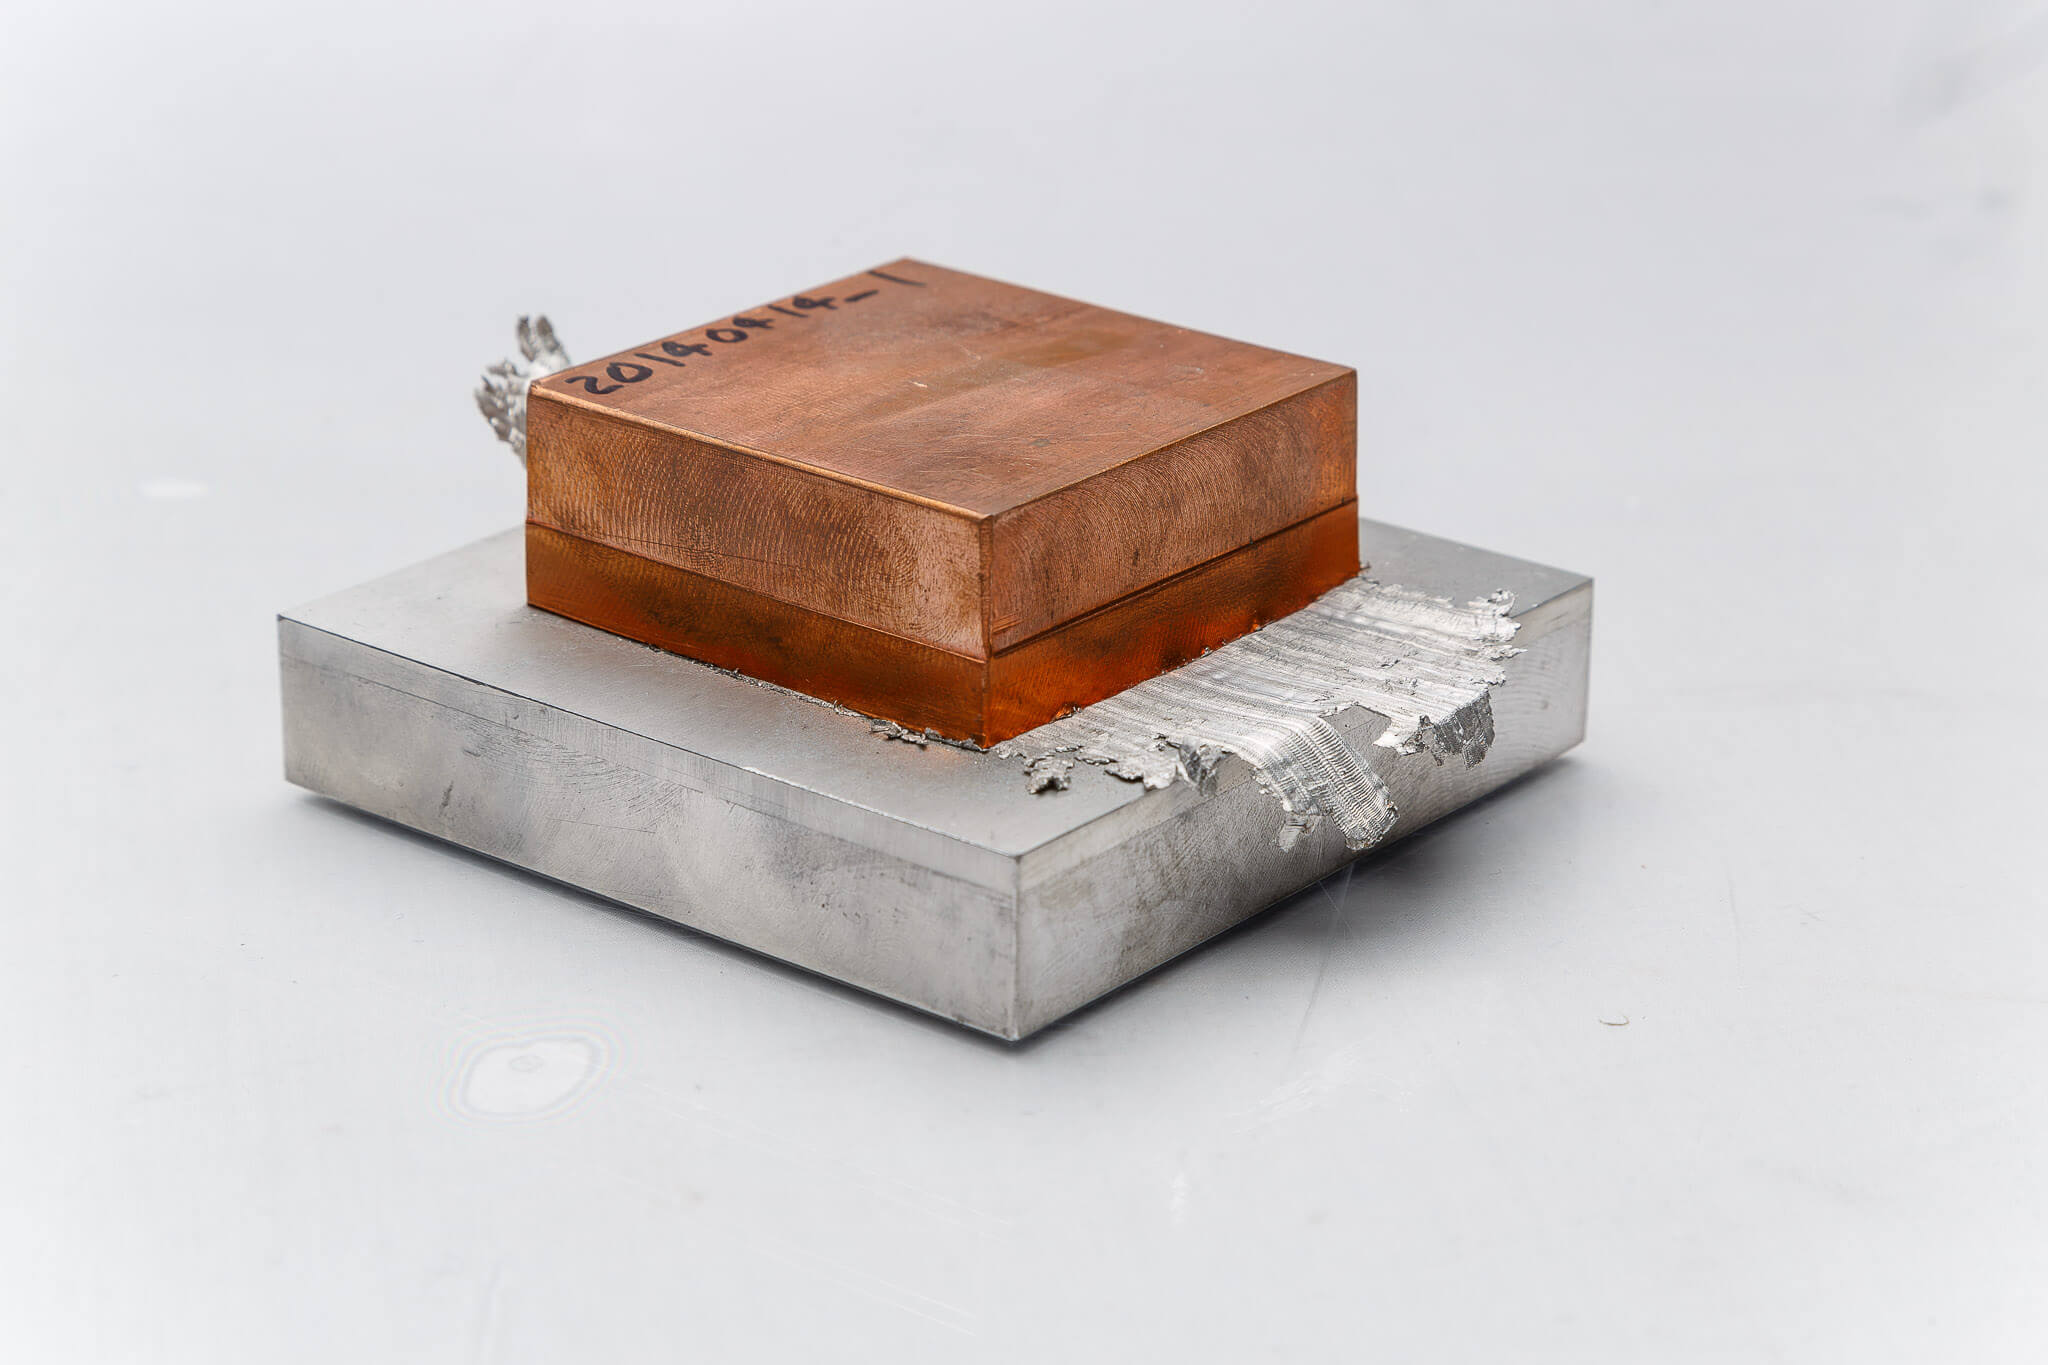 Bi-metallic application linear friction welding of copper alloy block to aluminum plate 
